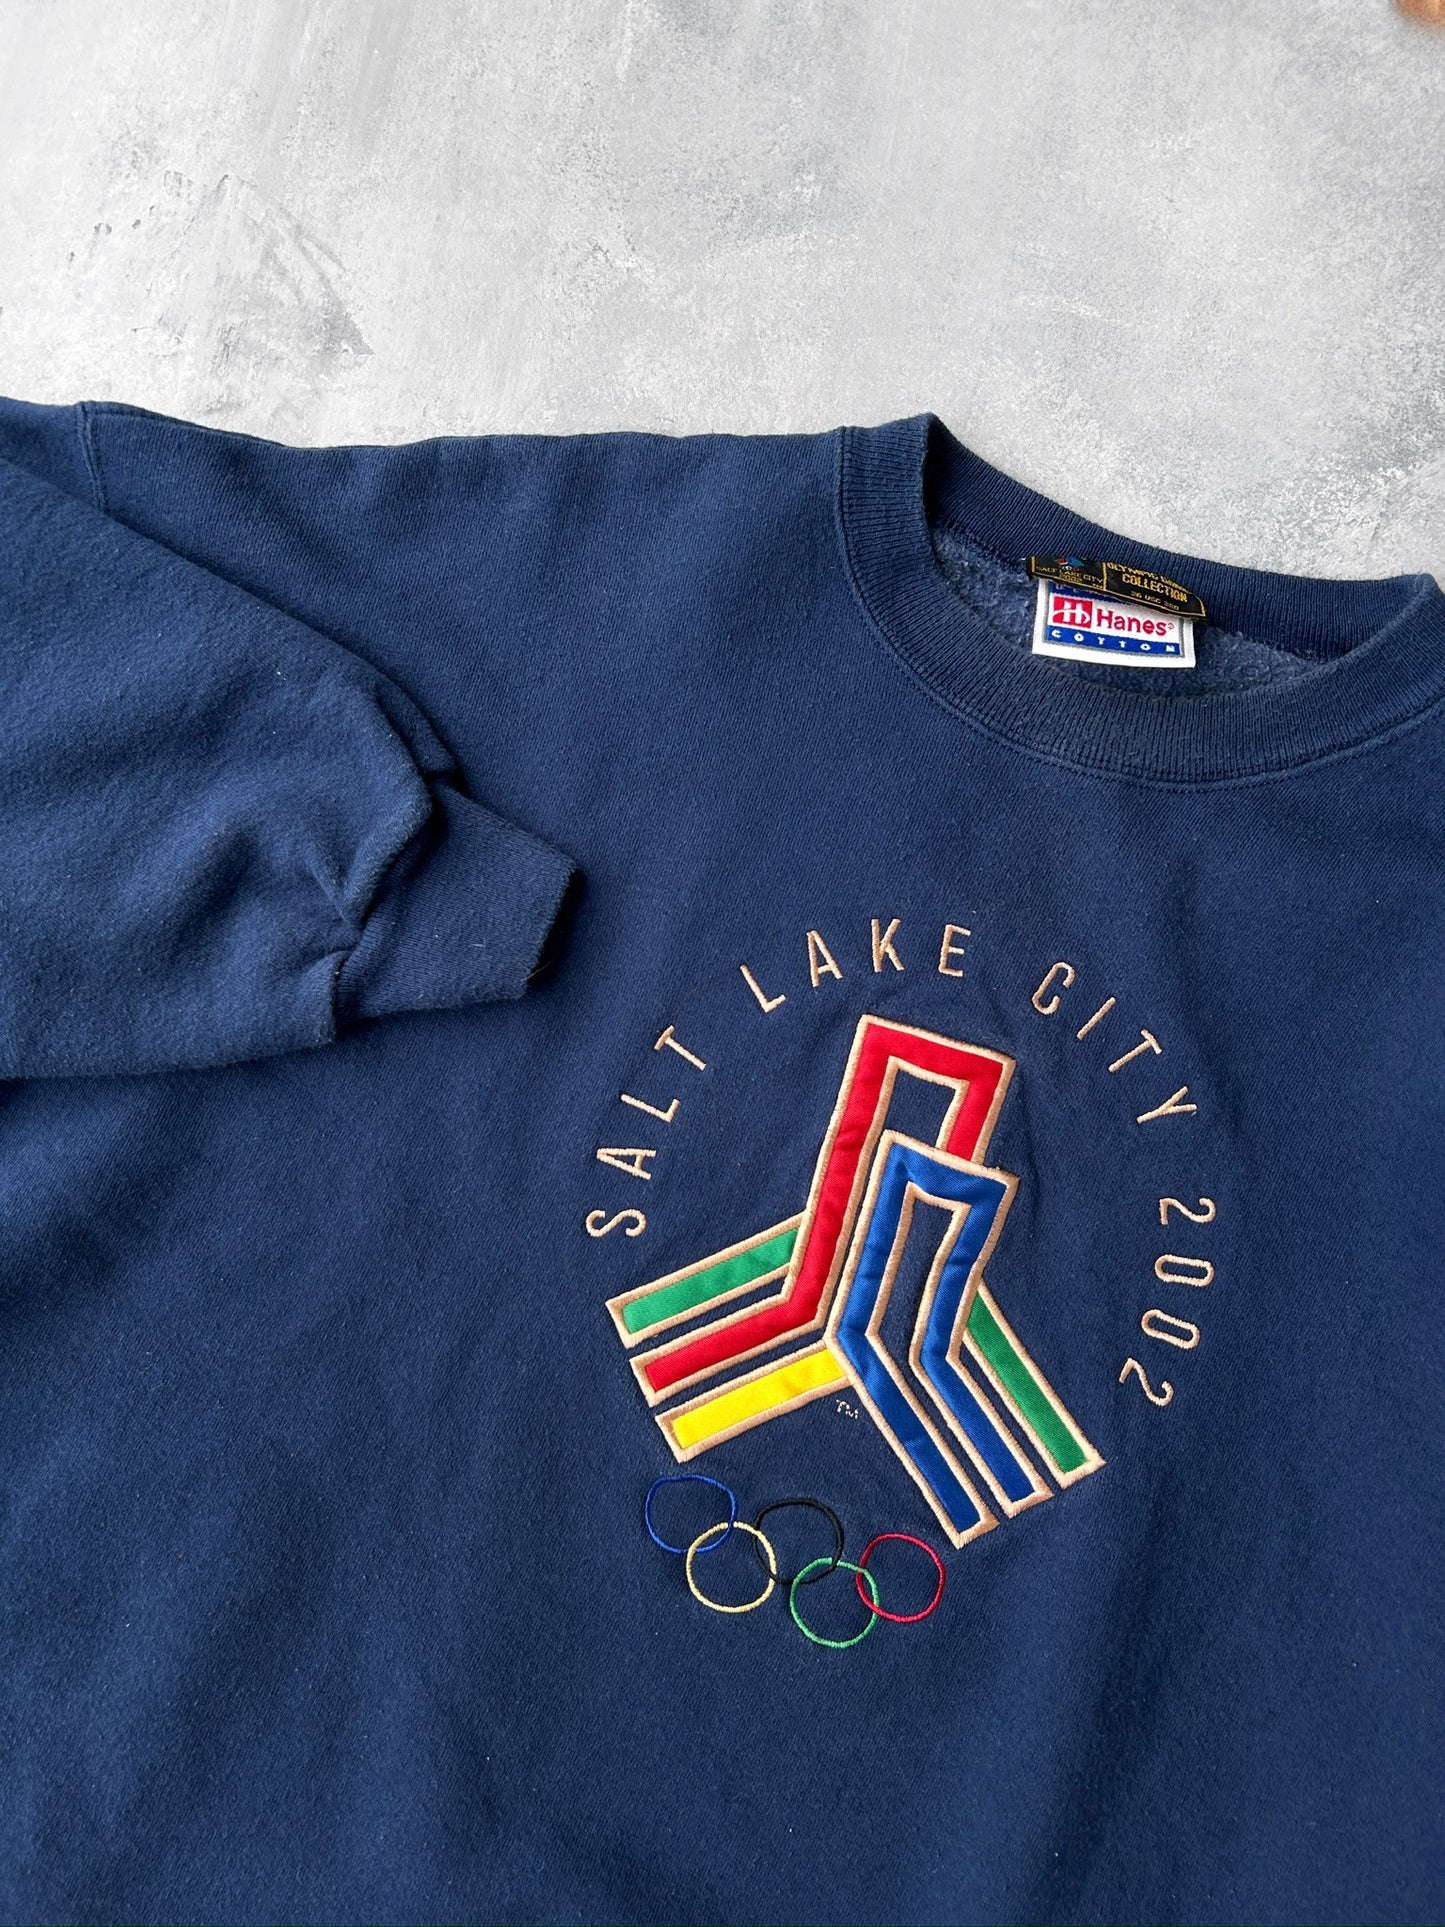 Salt Lake City Olympics Sweatshirt '02 - XXL